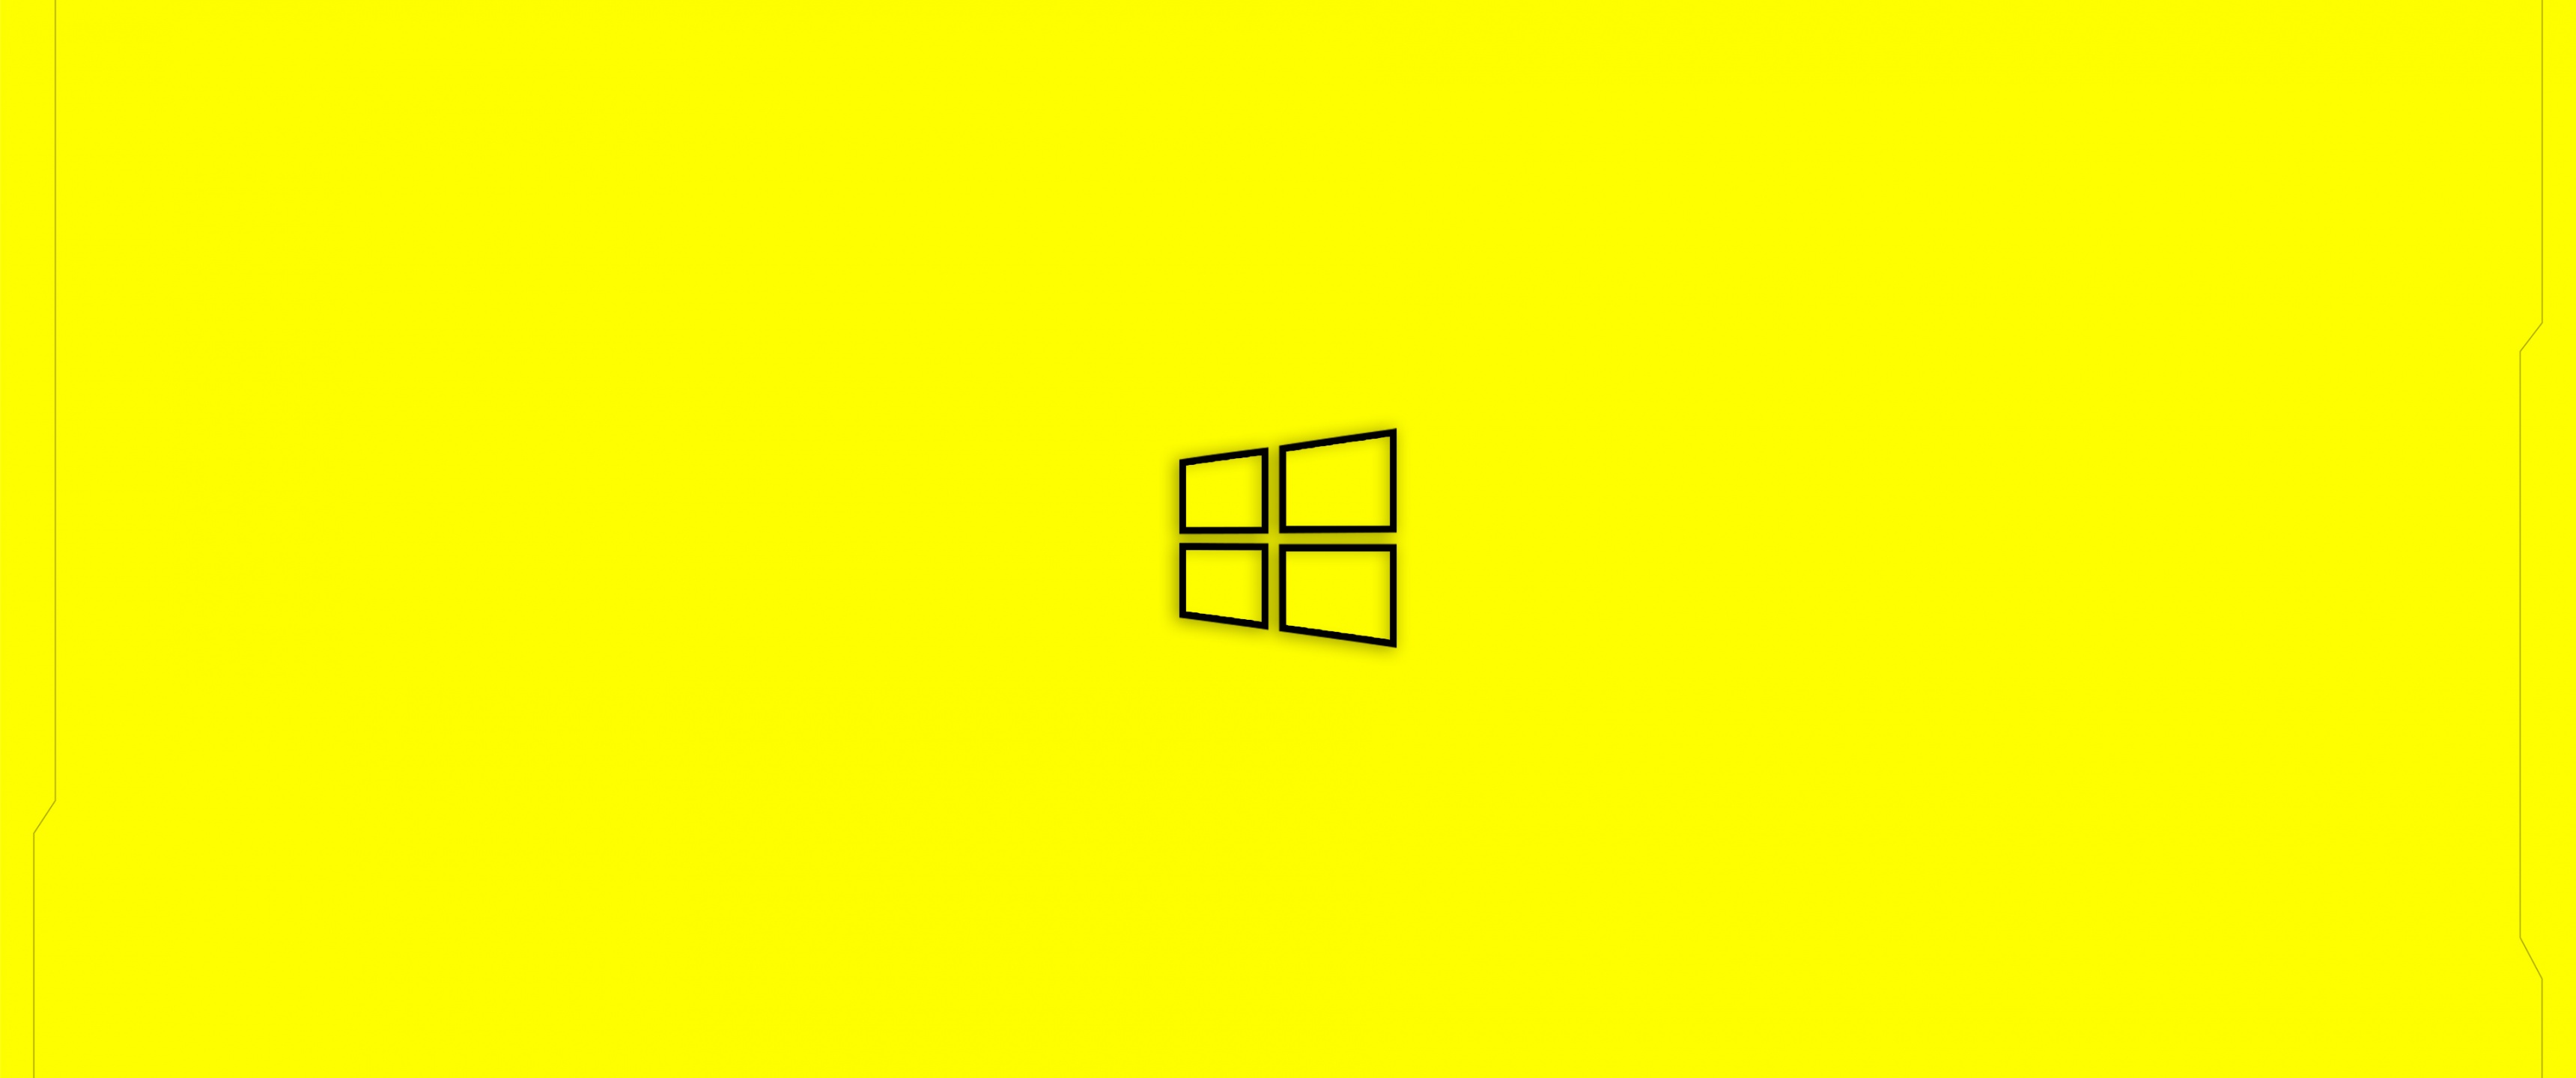 Windows 10 Wallpaper 4K, Cyberpunk 2077, Yellow background